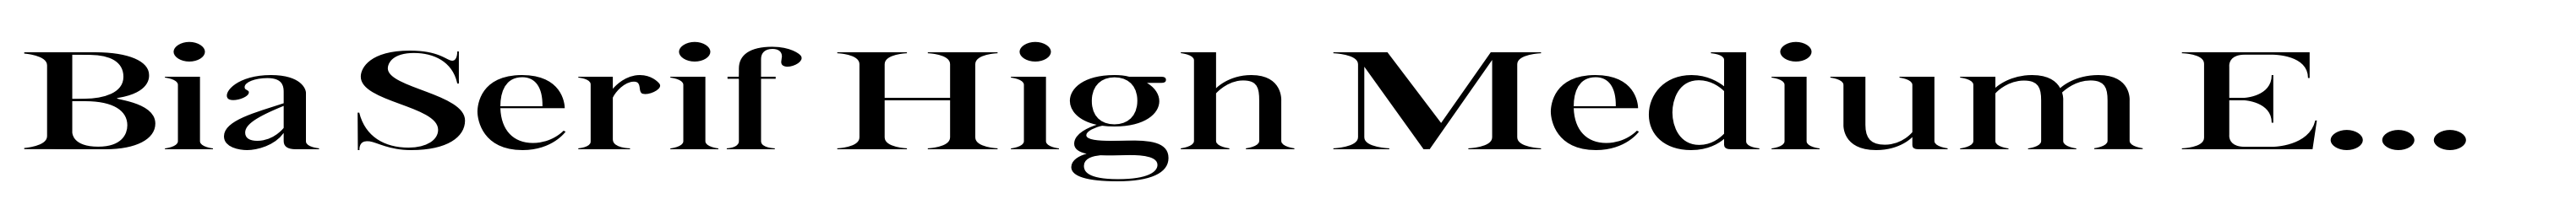 Bia Serif High Medium Expanded